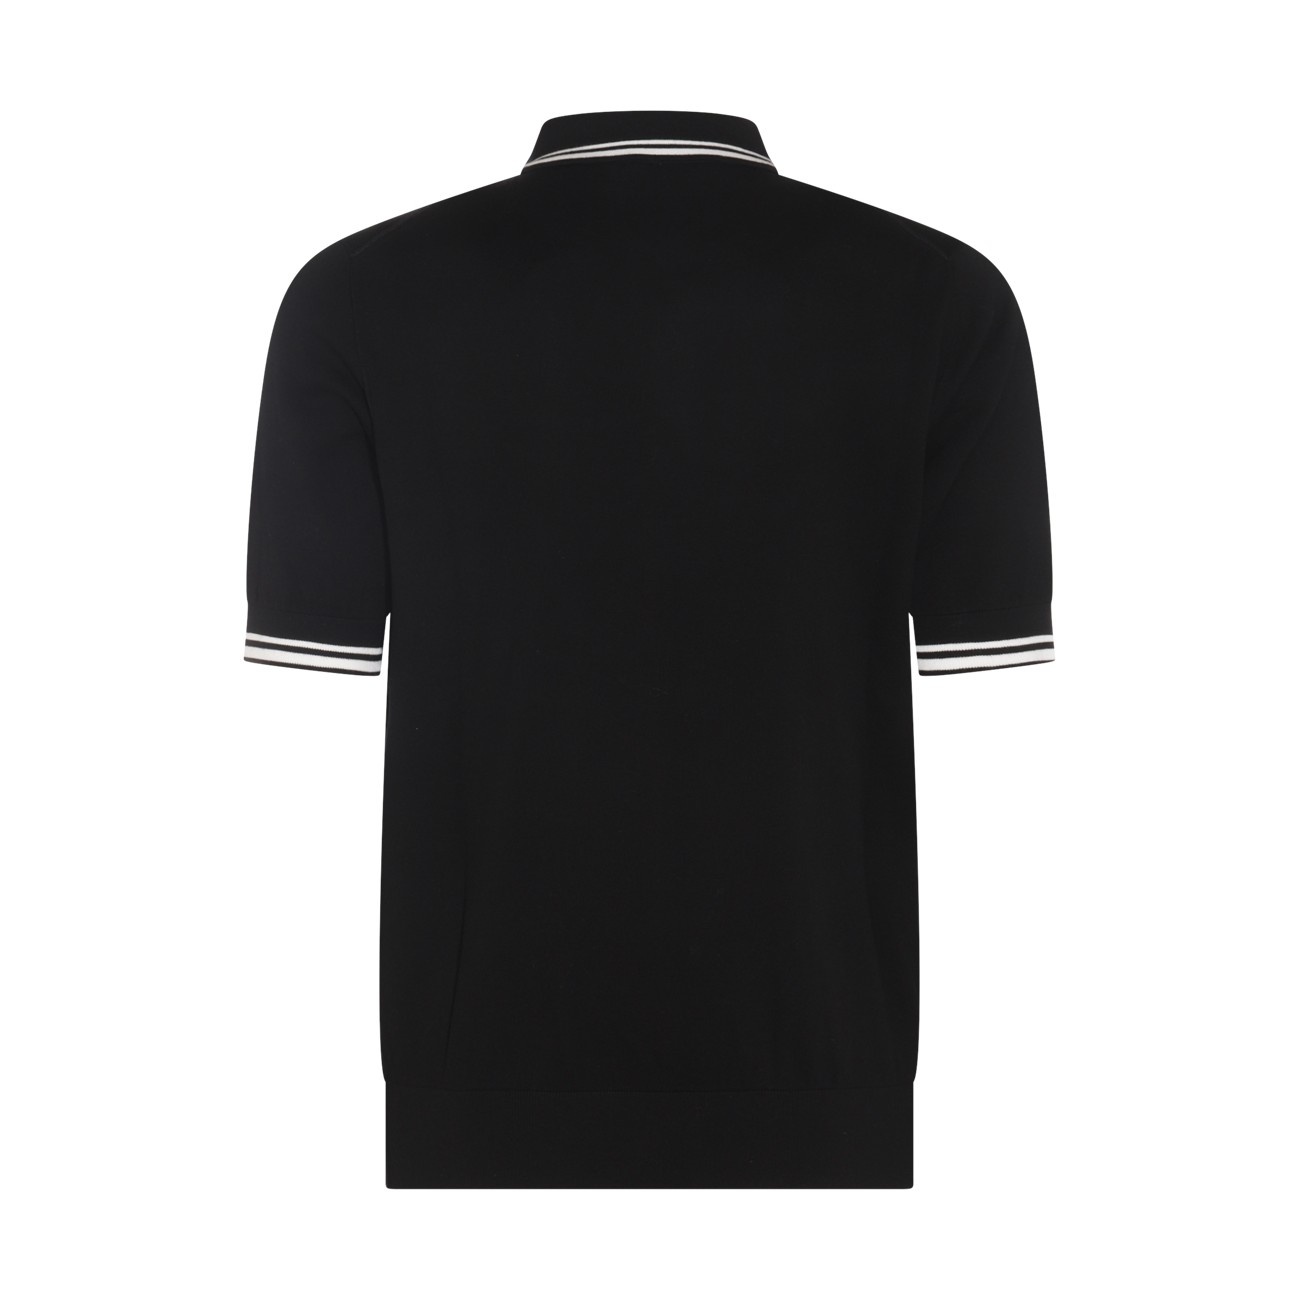 black and white cotton blend polo shirt - 2